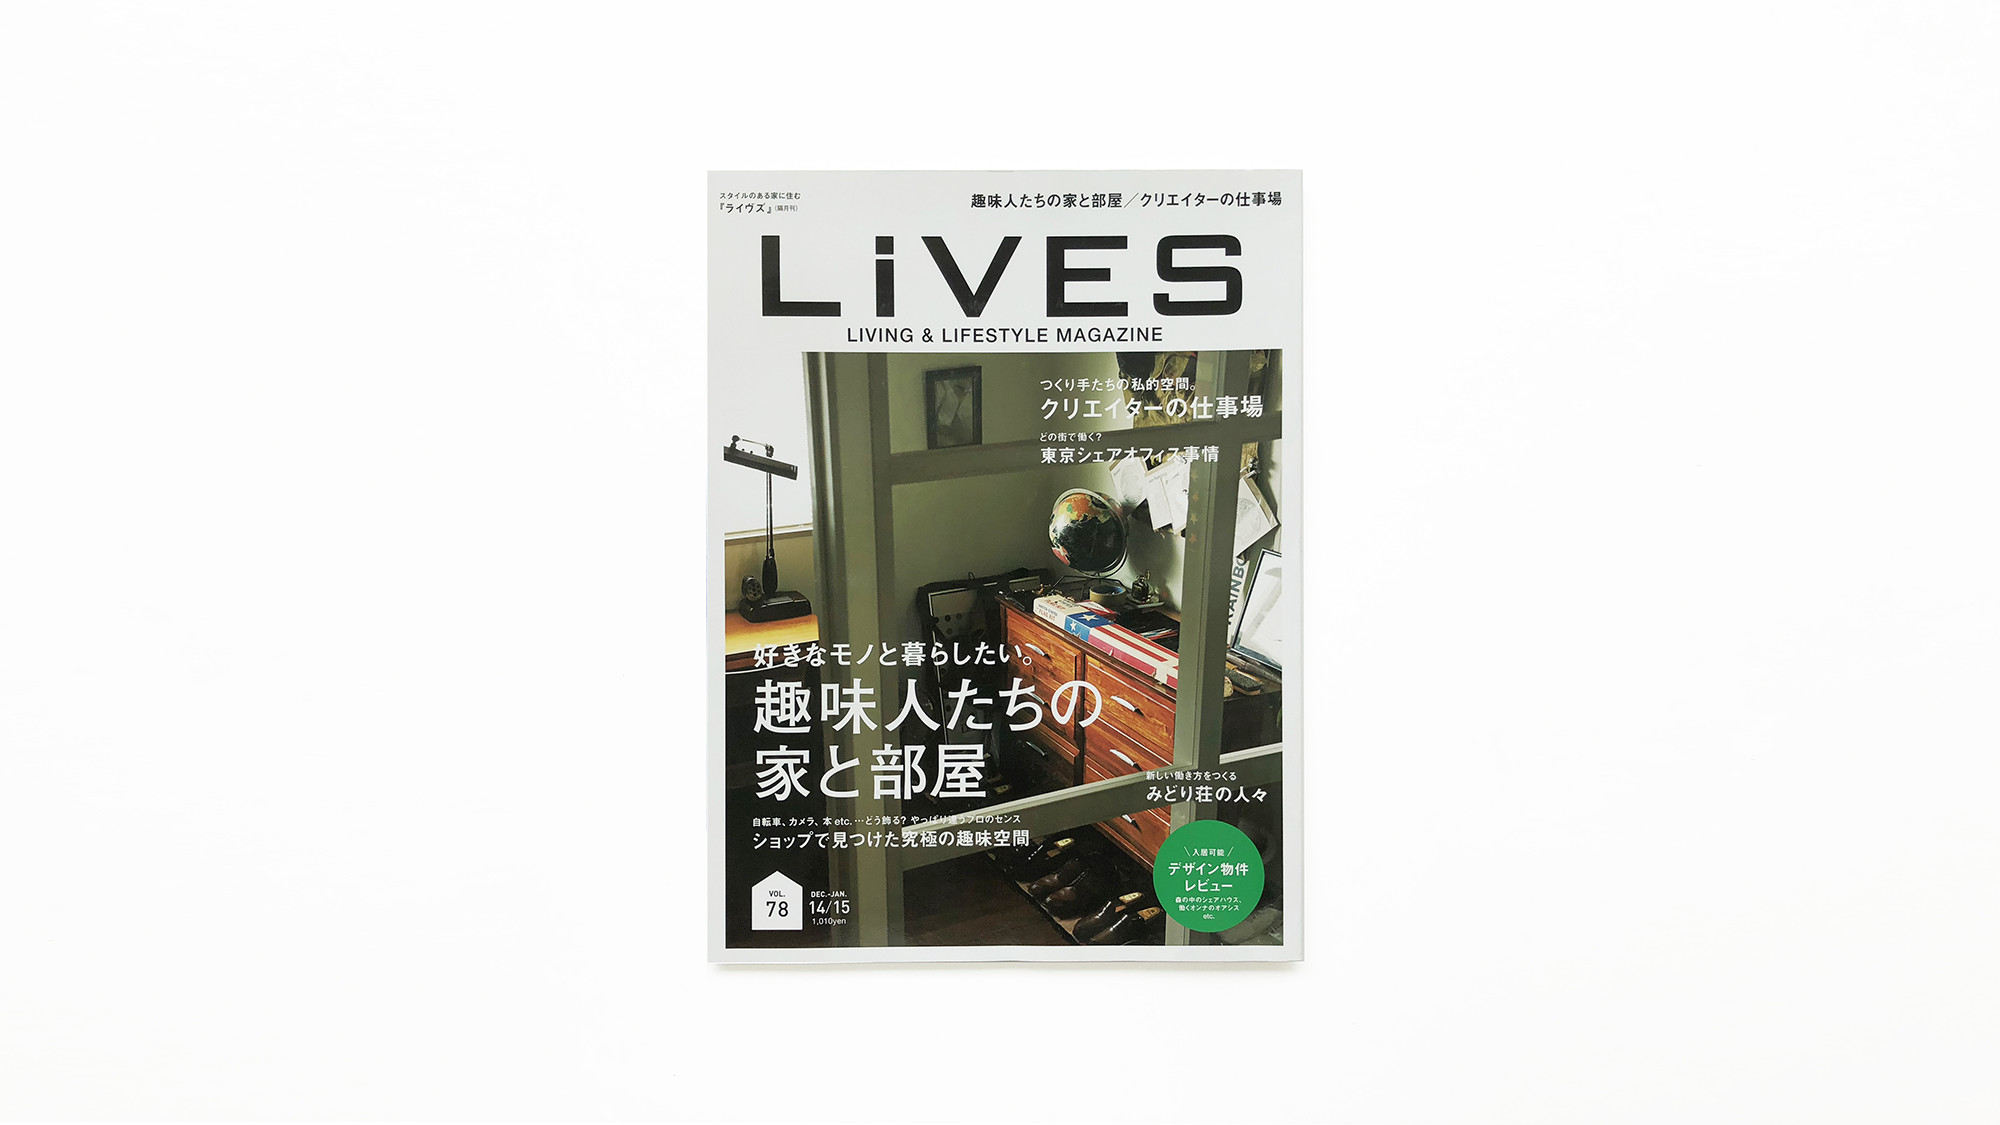 LIVES vol.78 November / 2014